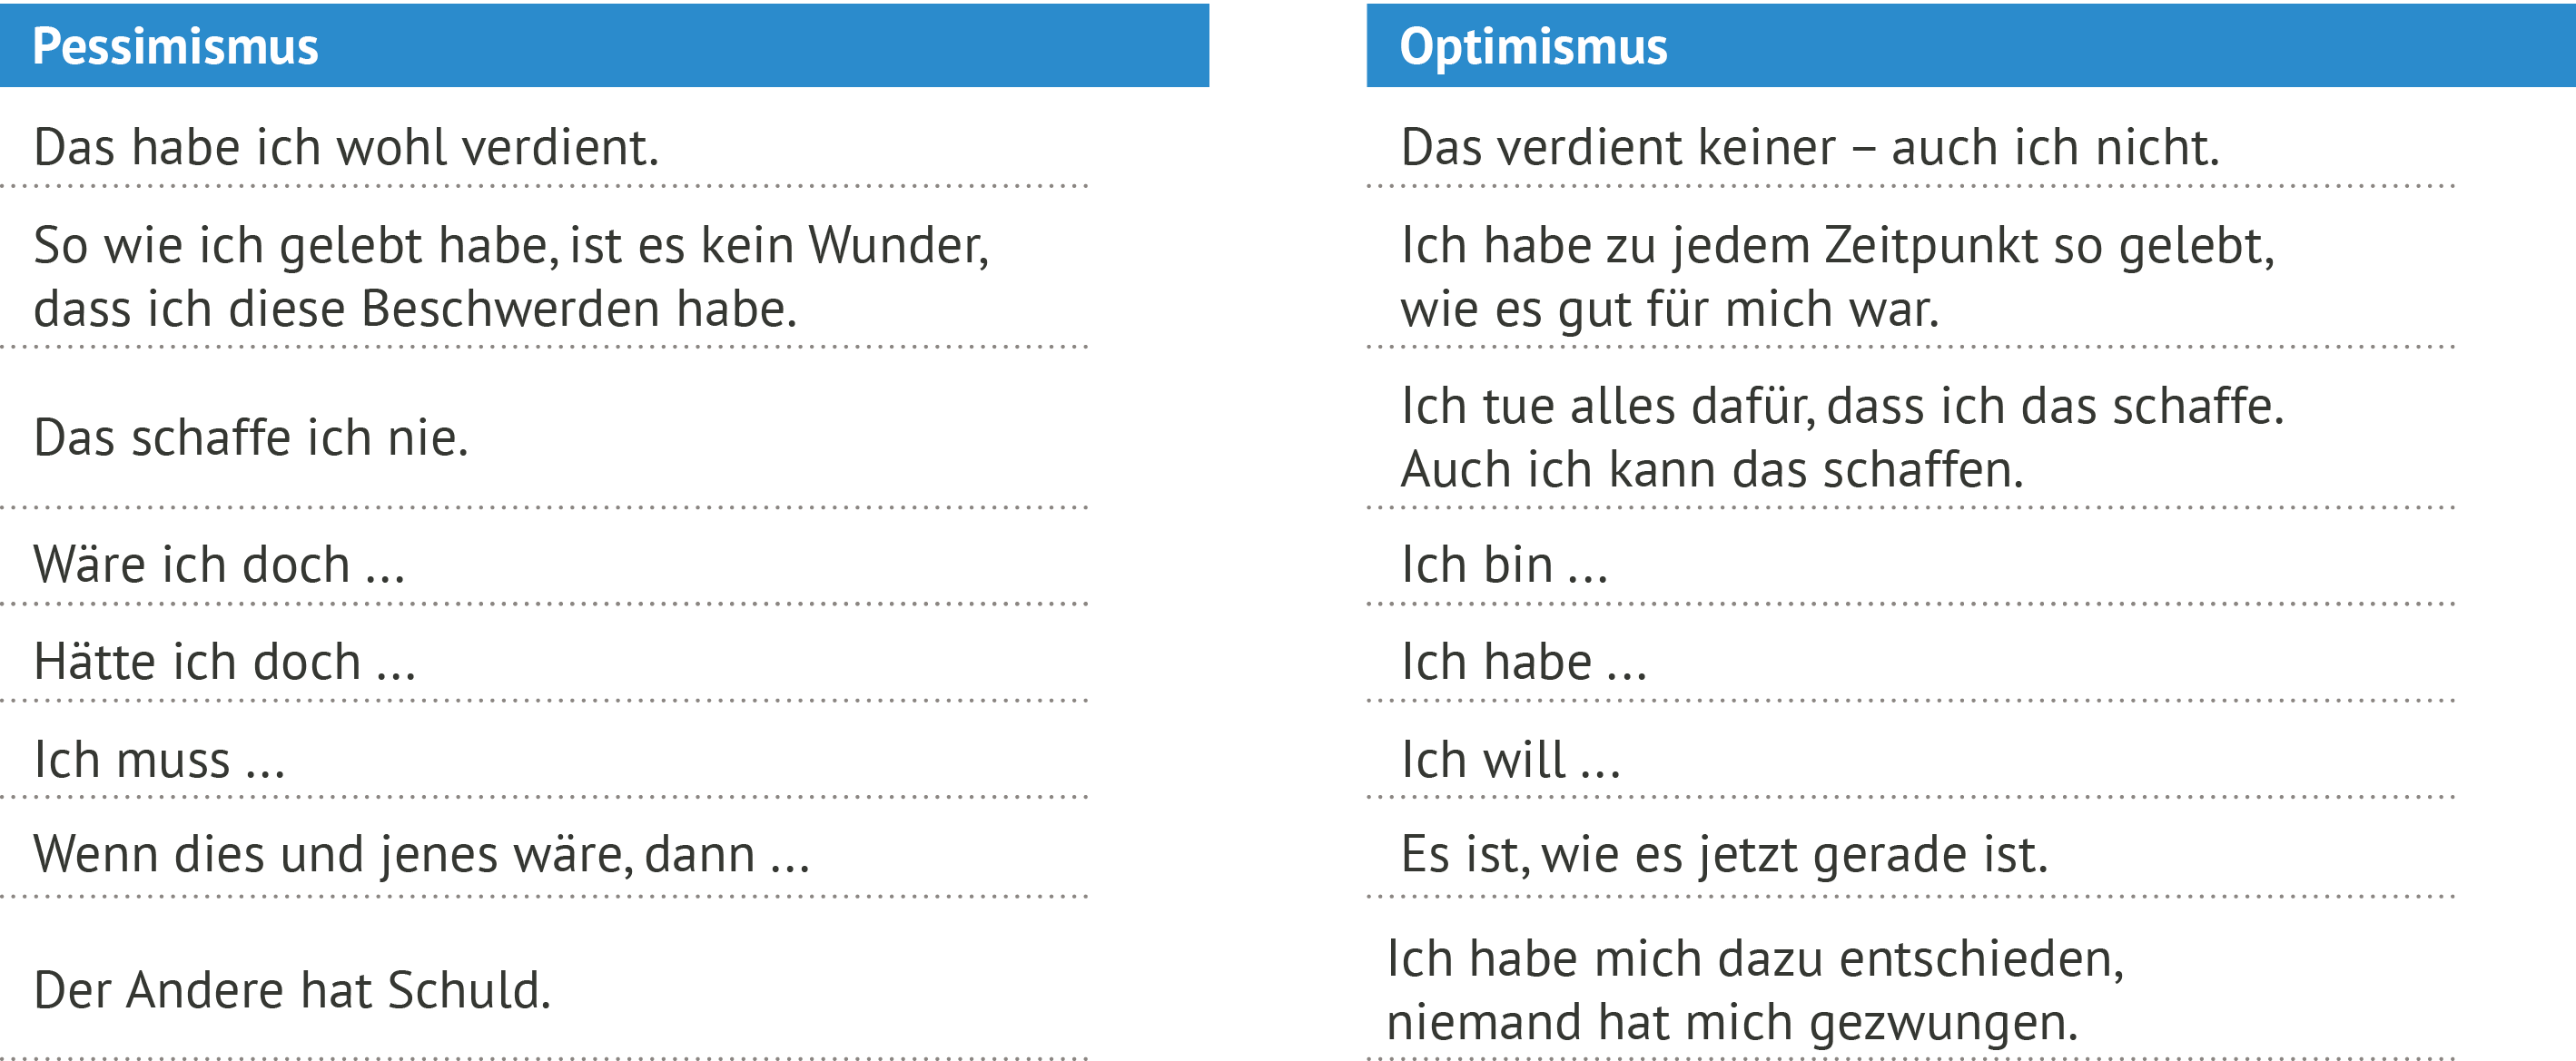 liste optimismus pessimismus